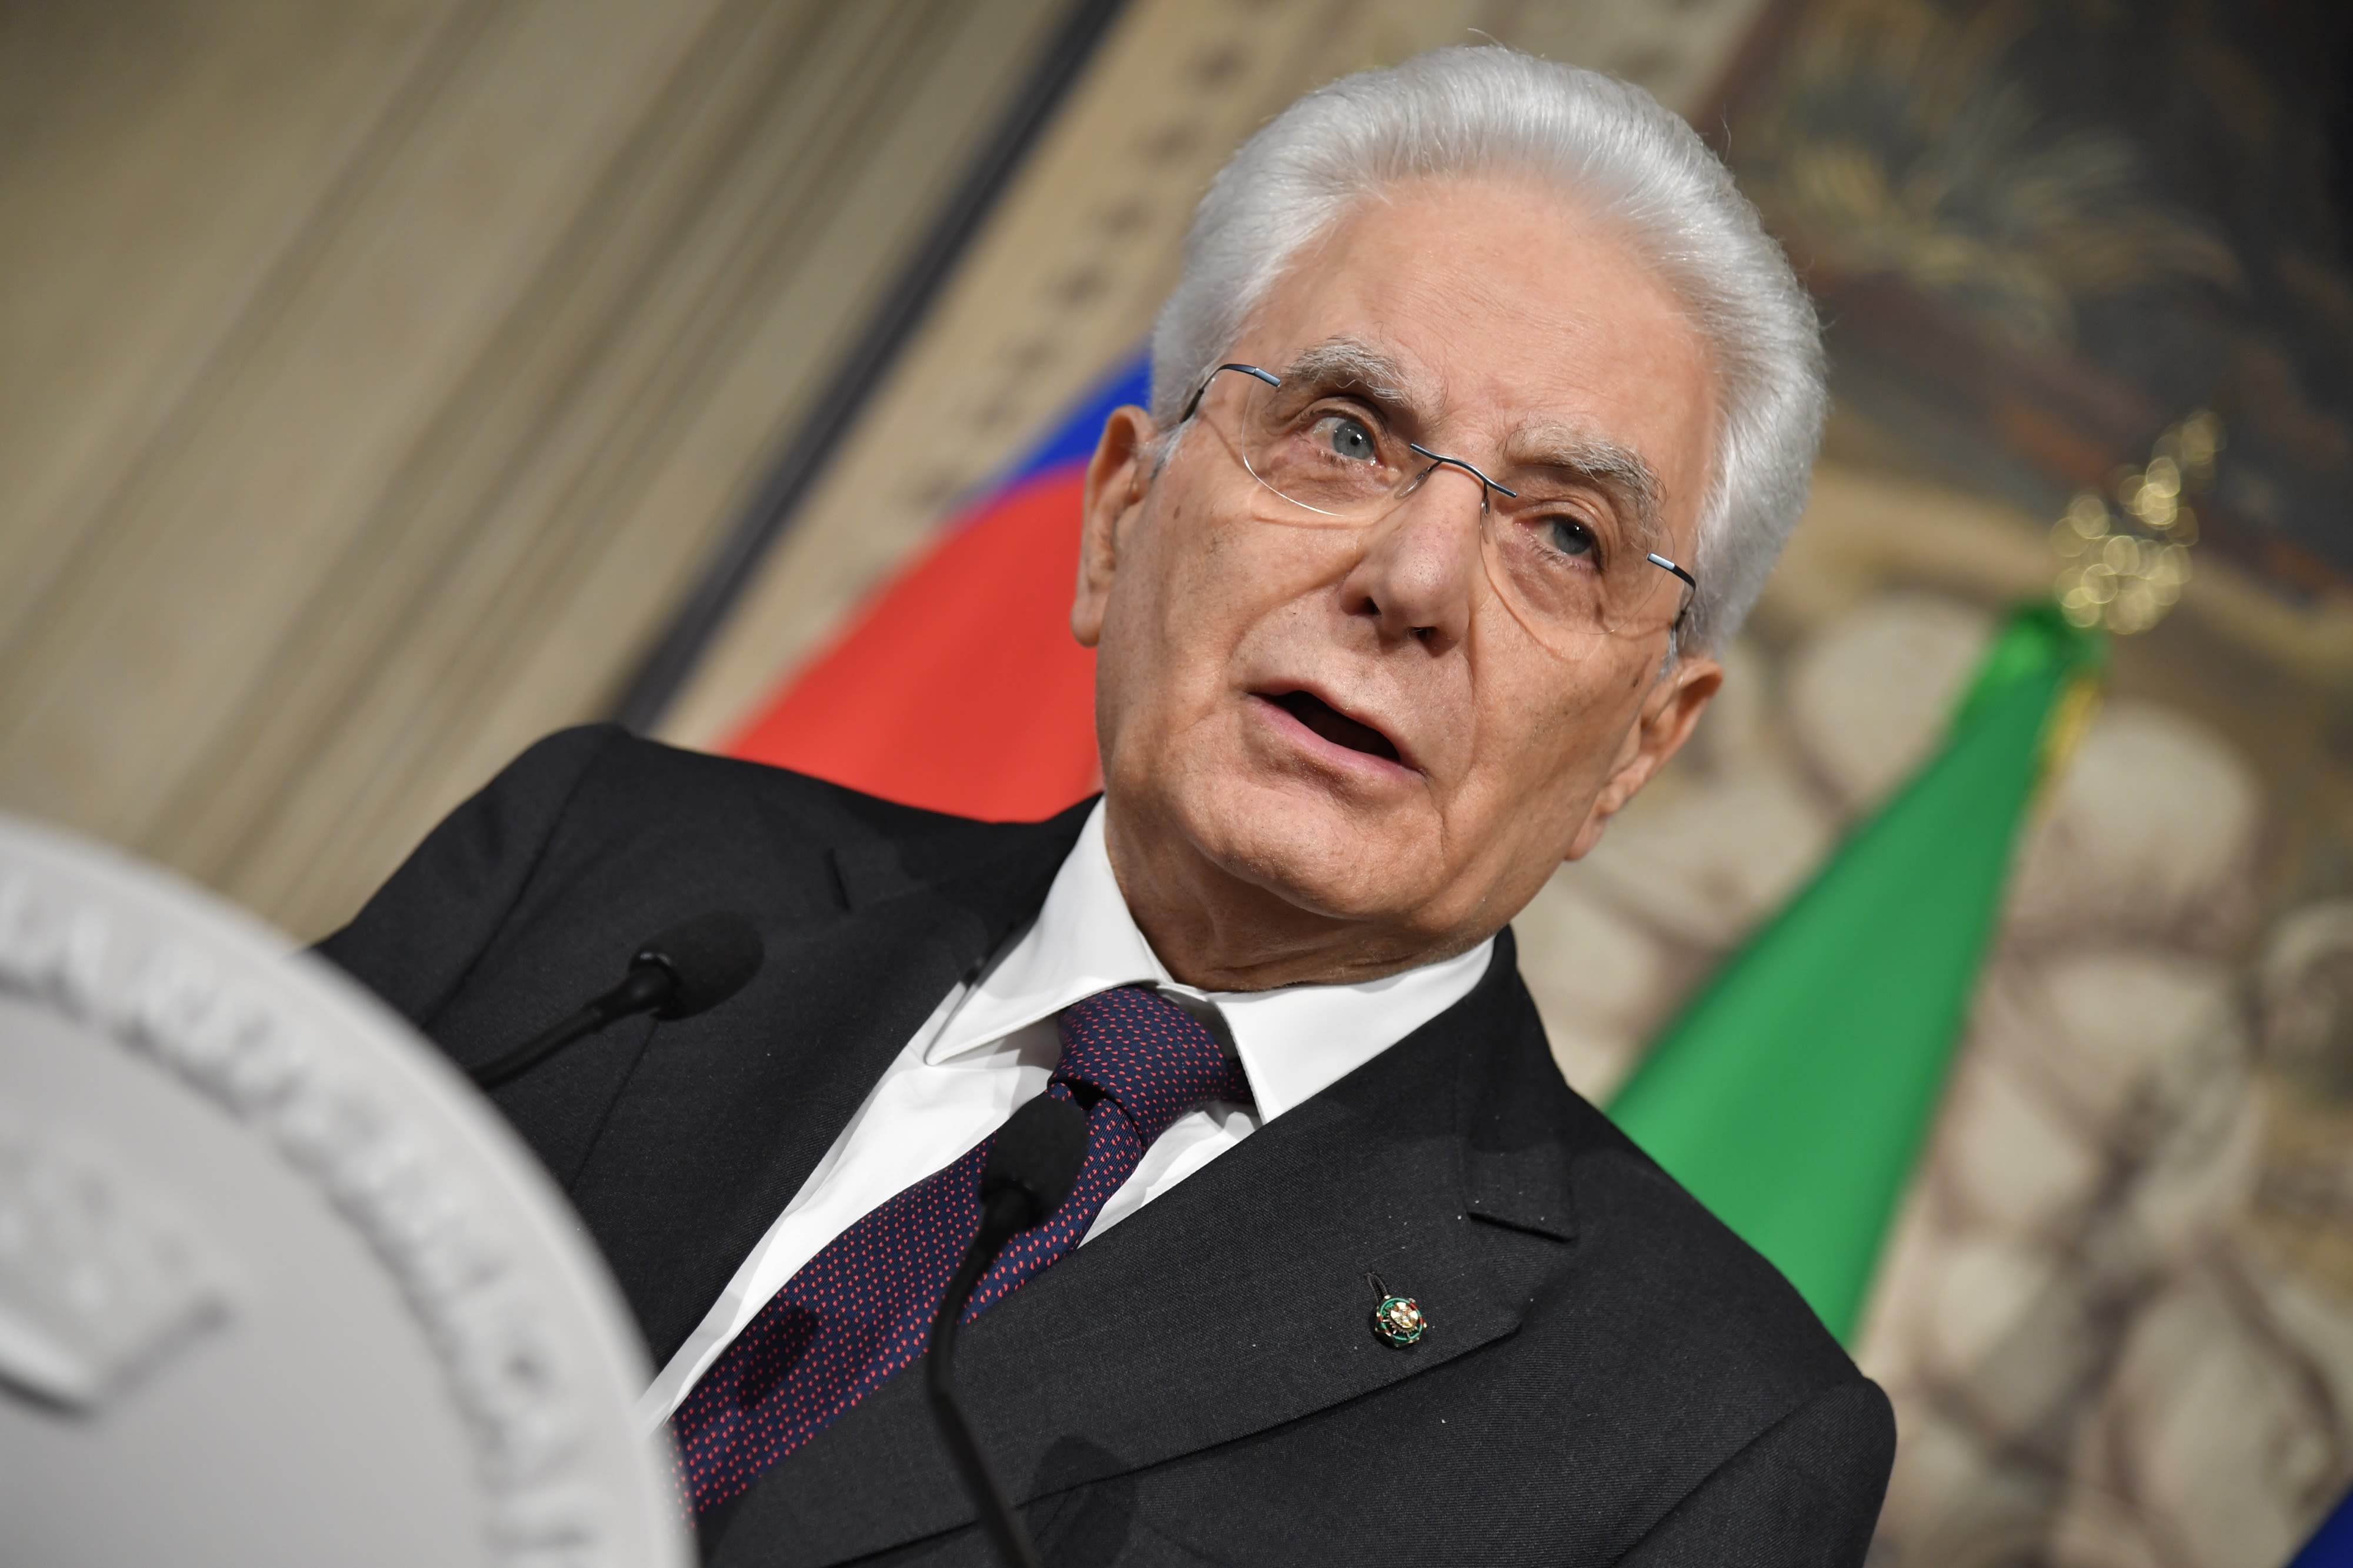 Donatella Versace slams Italian government's anti-LGBTQ+ policies